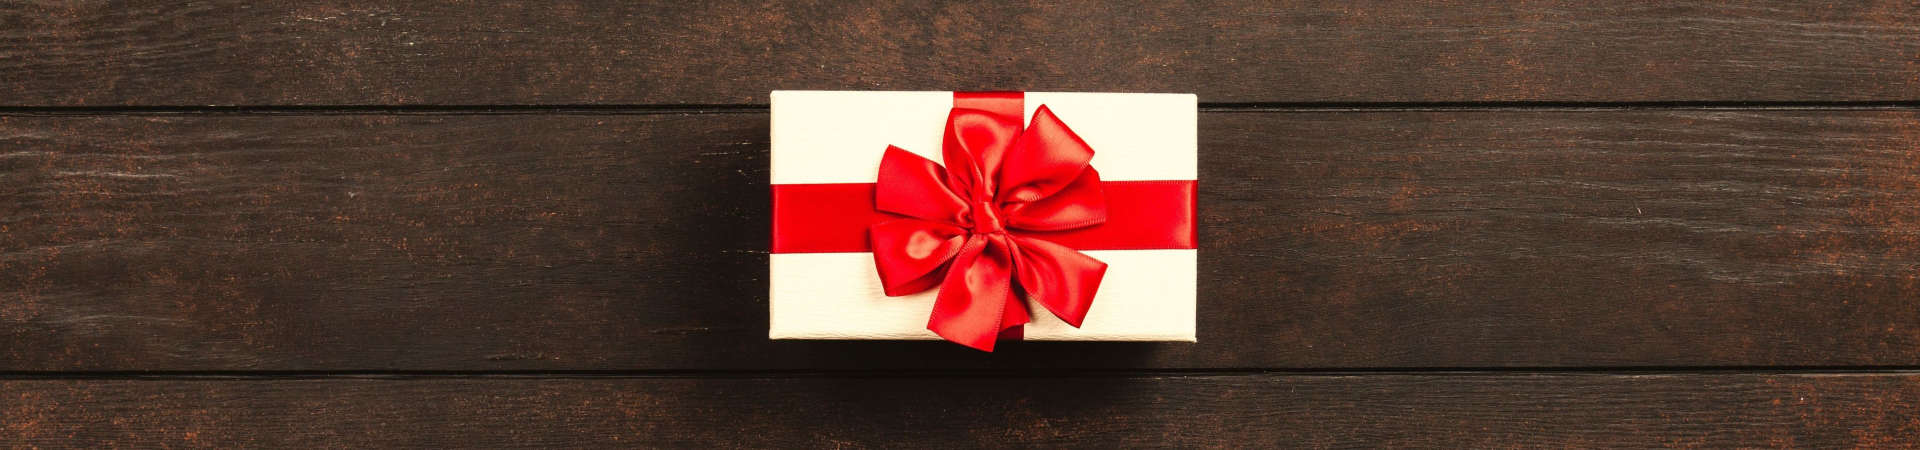 gift box on wood background